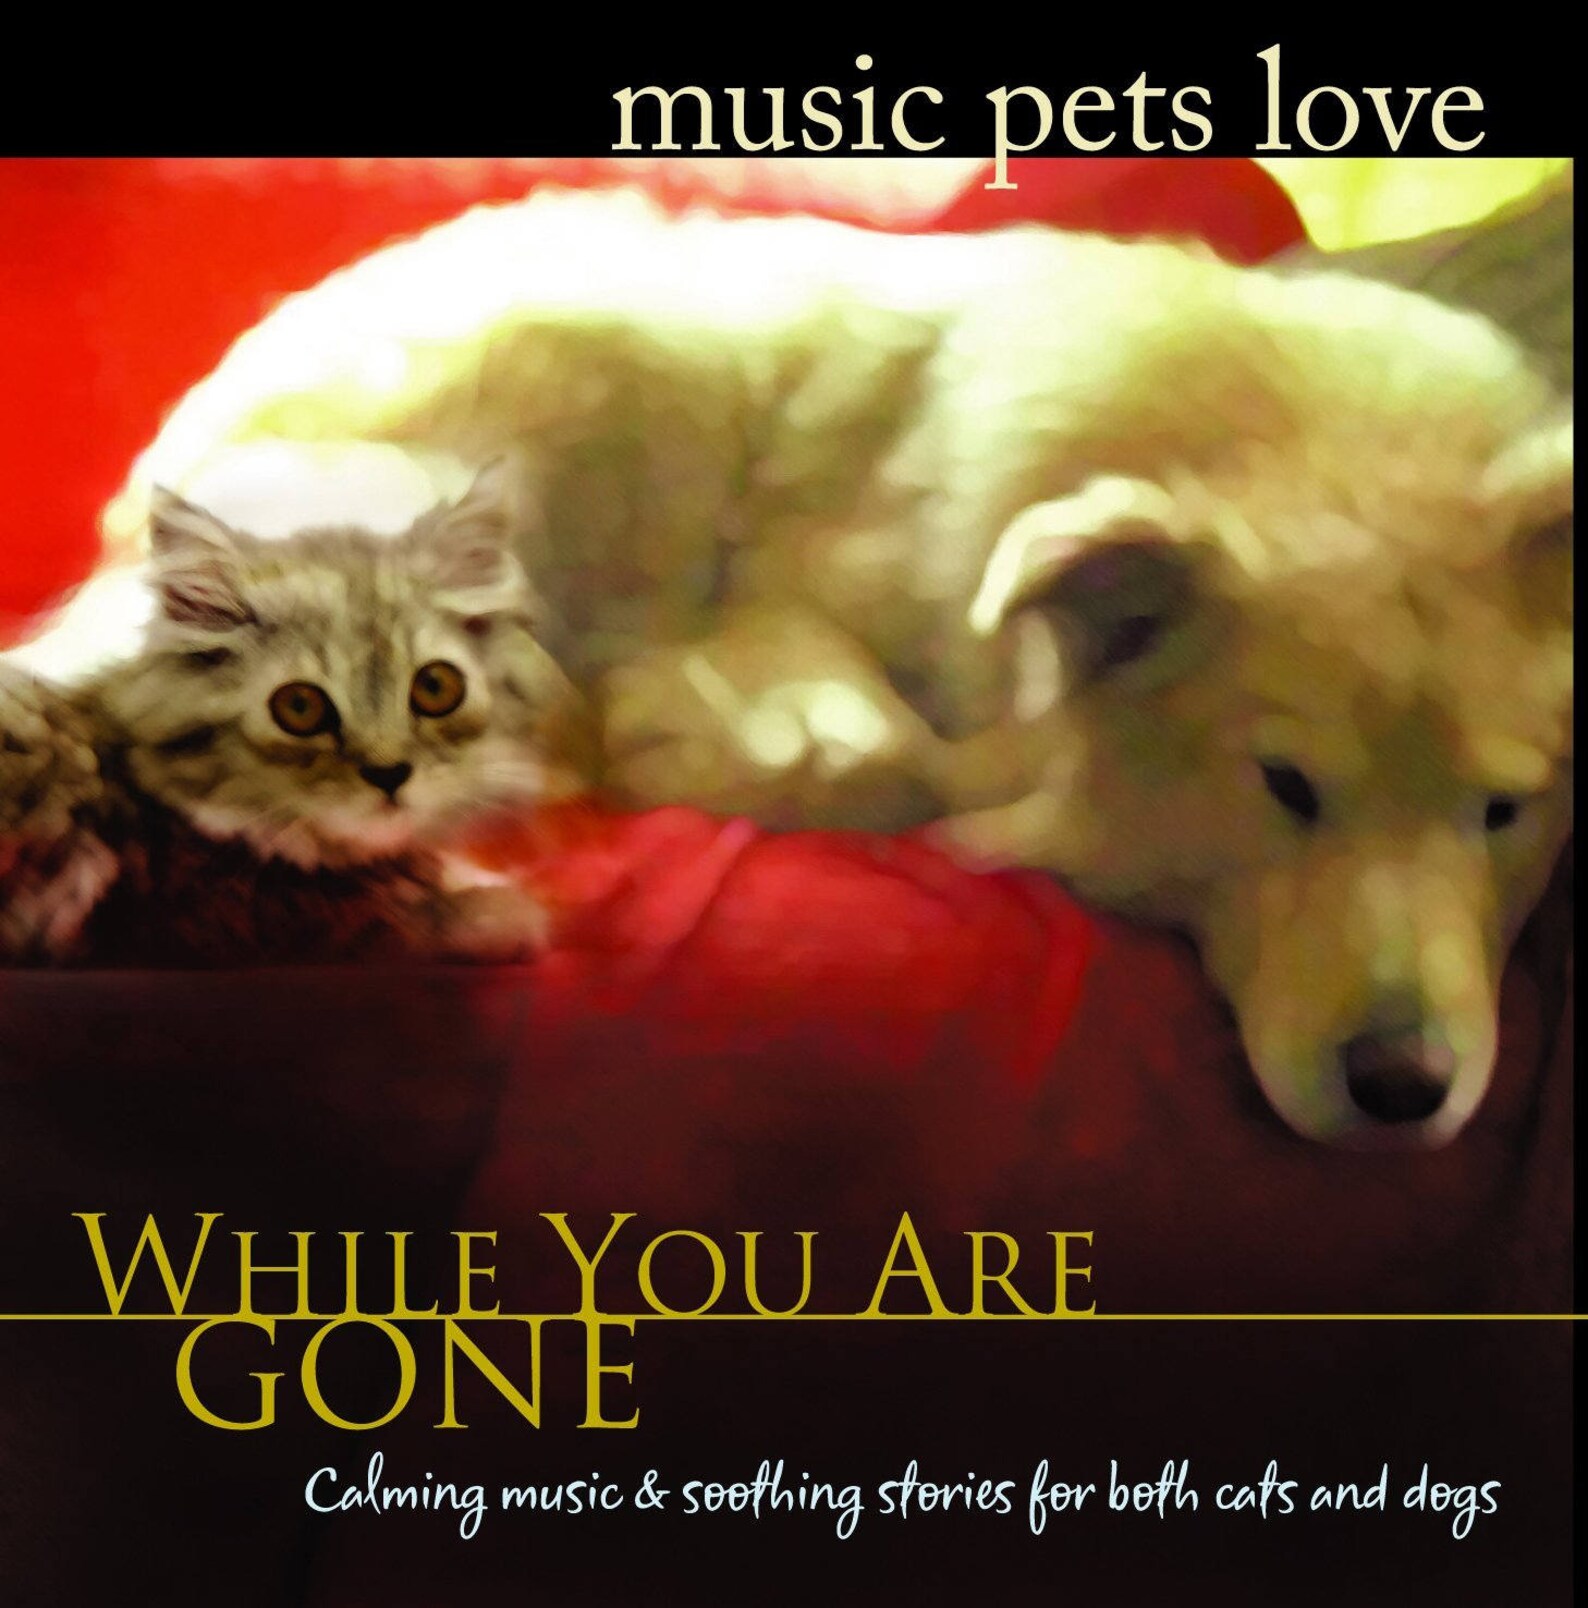 Music Pets. Pet песня. Pets offer Unconditional Love. Rock musicians with Pets. Pets музыка